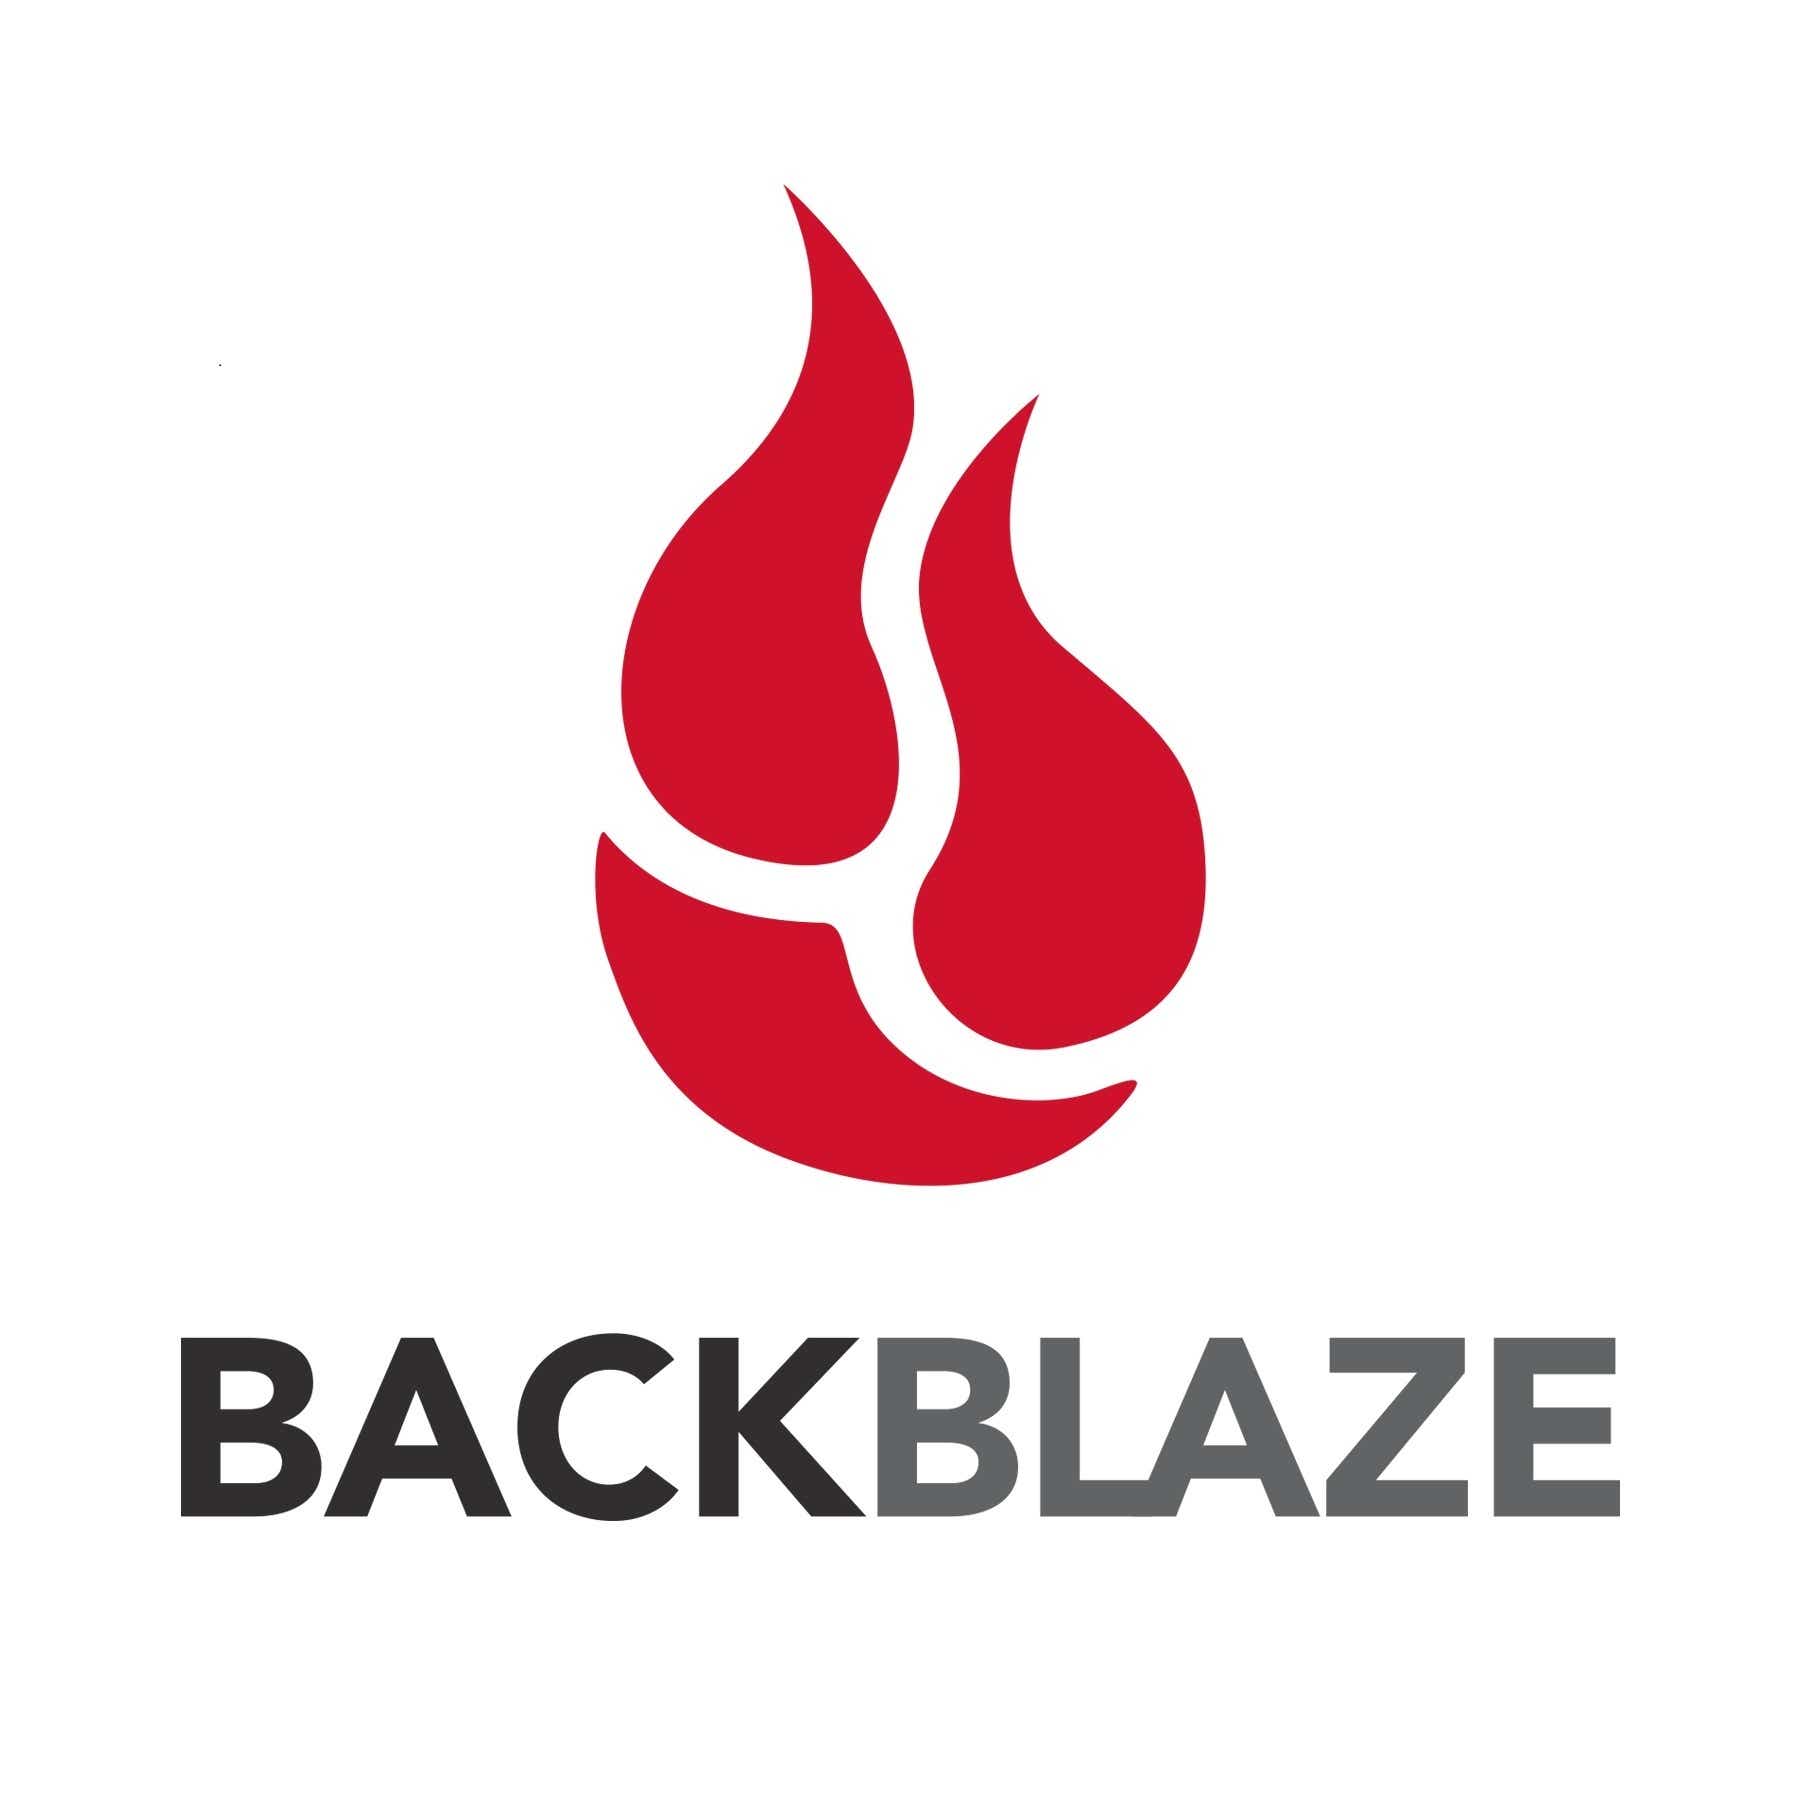 Backblaze - Best budget cloud backup